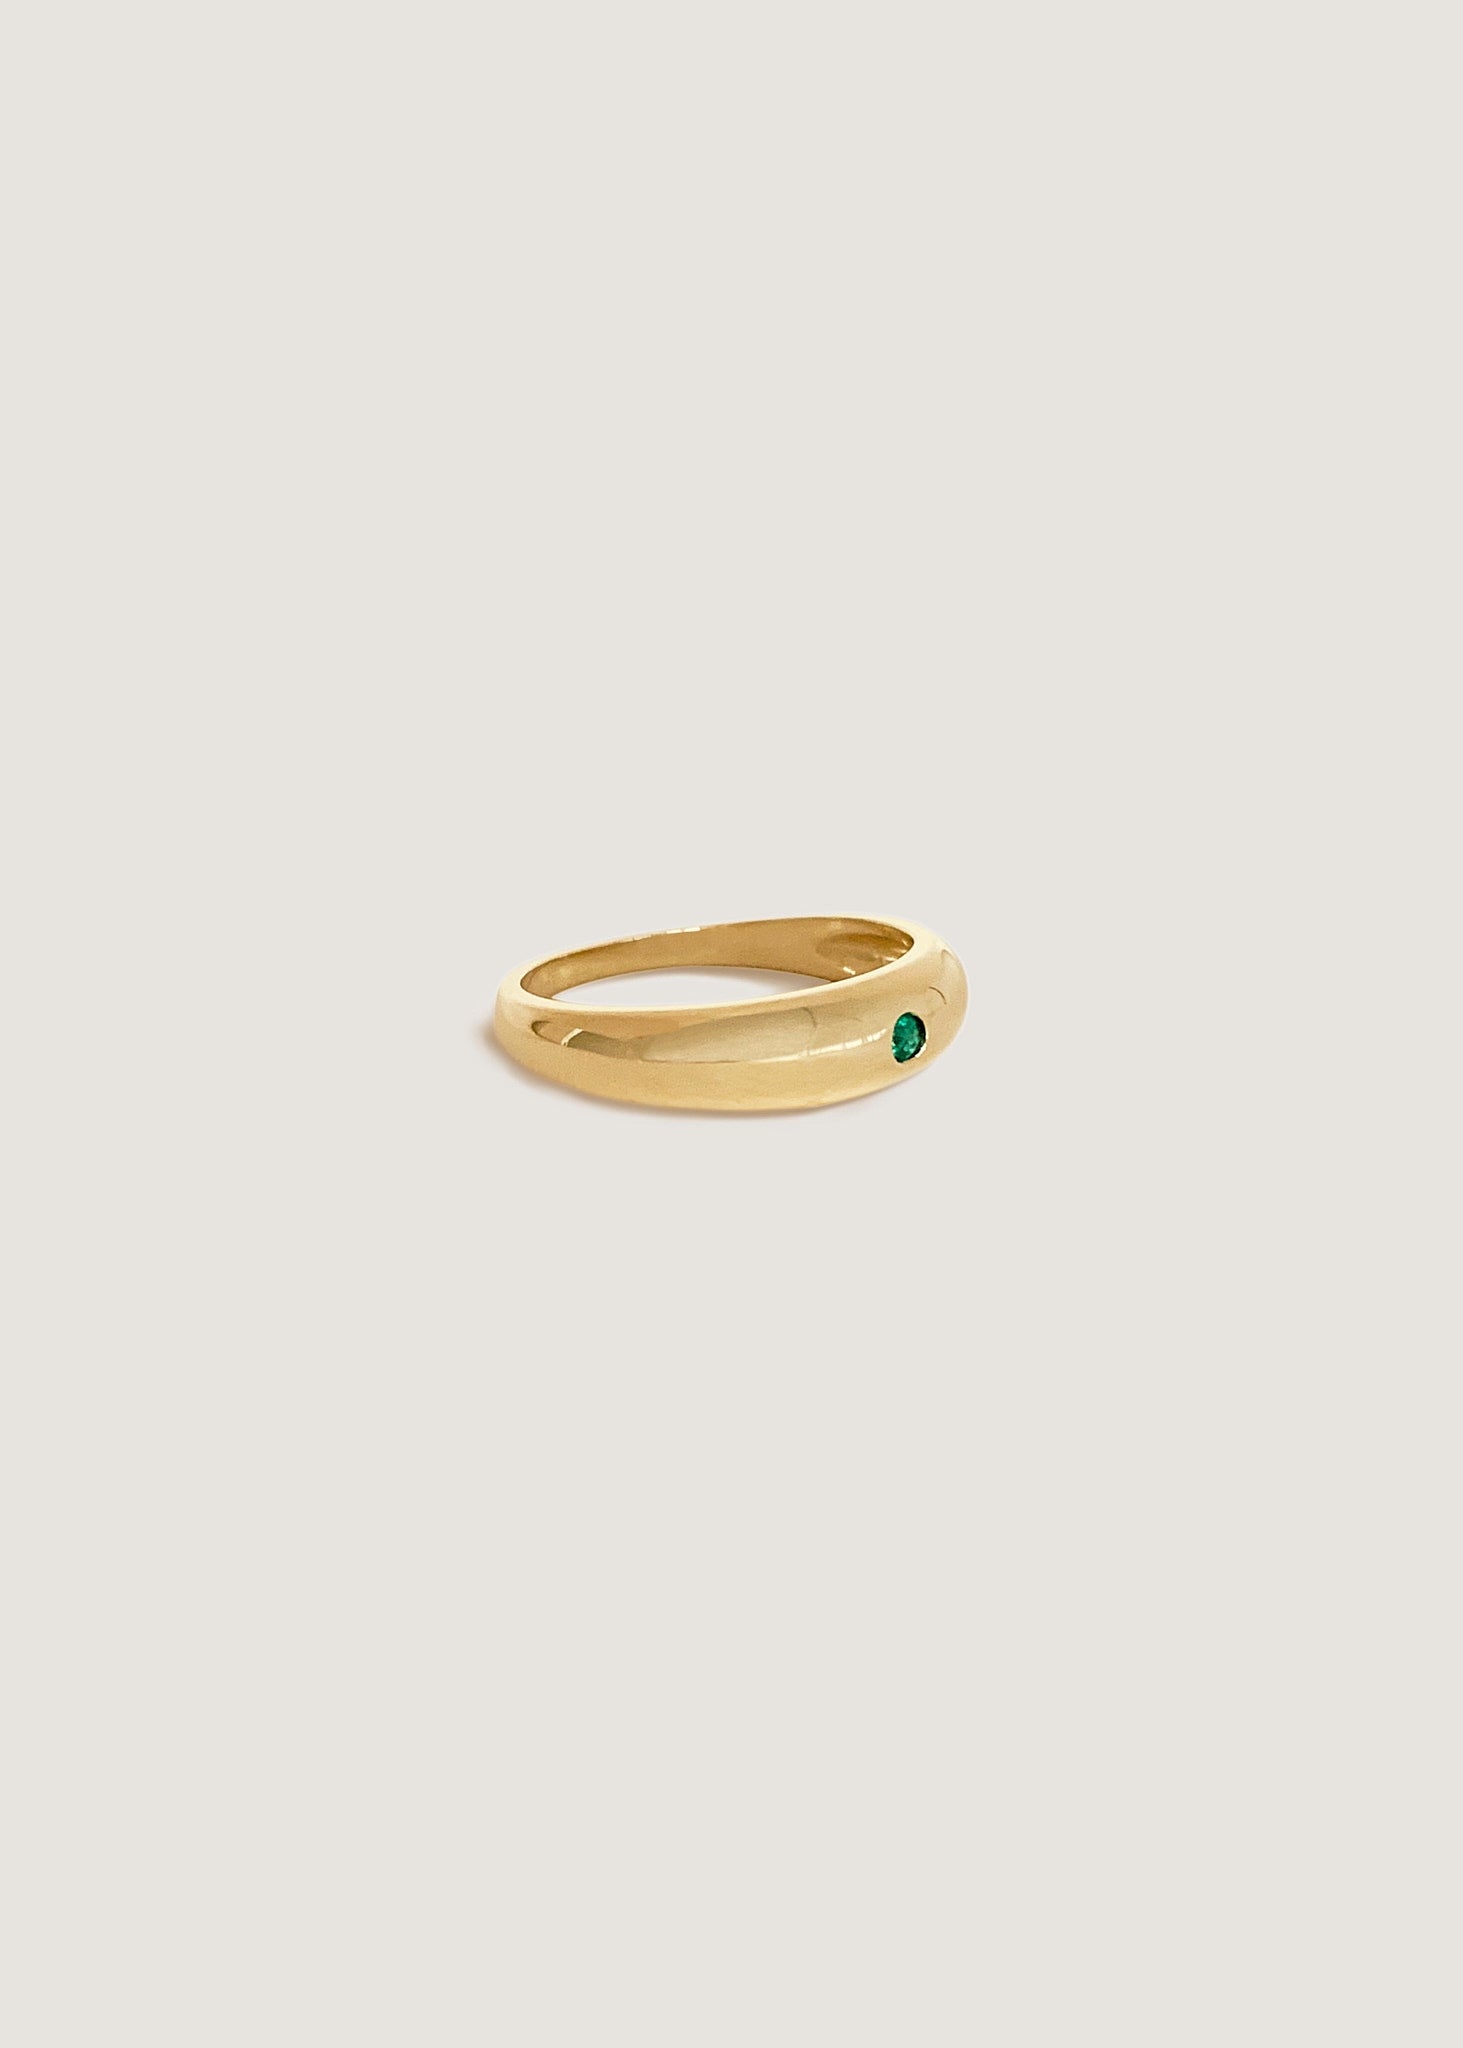 alt= "Amelia Dome Ring I - Emerald"